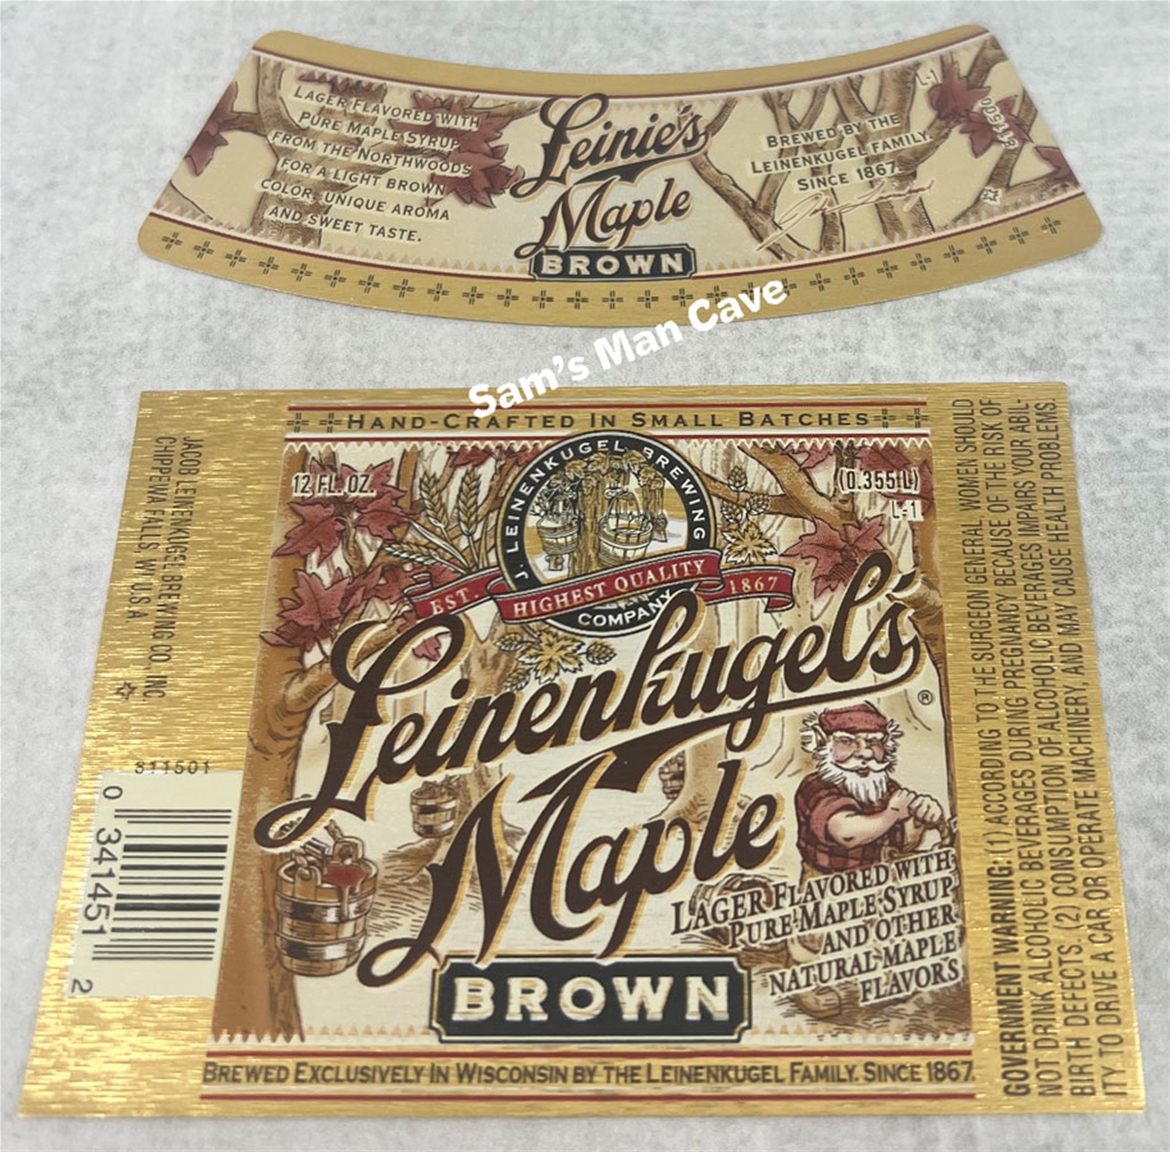 Leinenkugel's Maple Brown Beer Label with neck